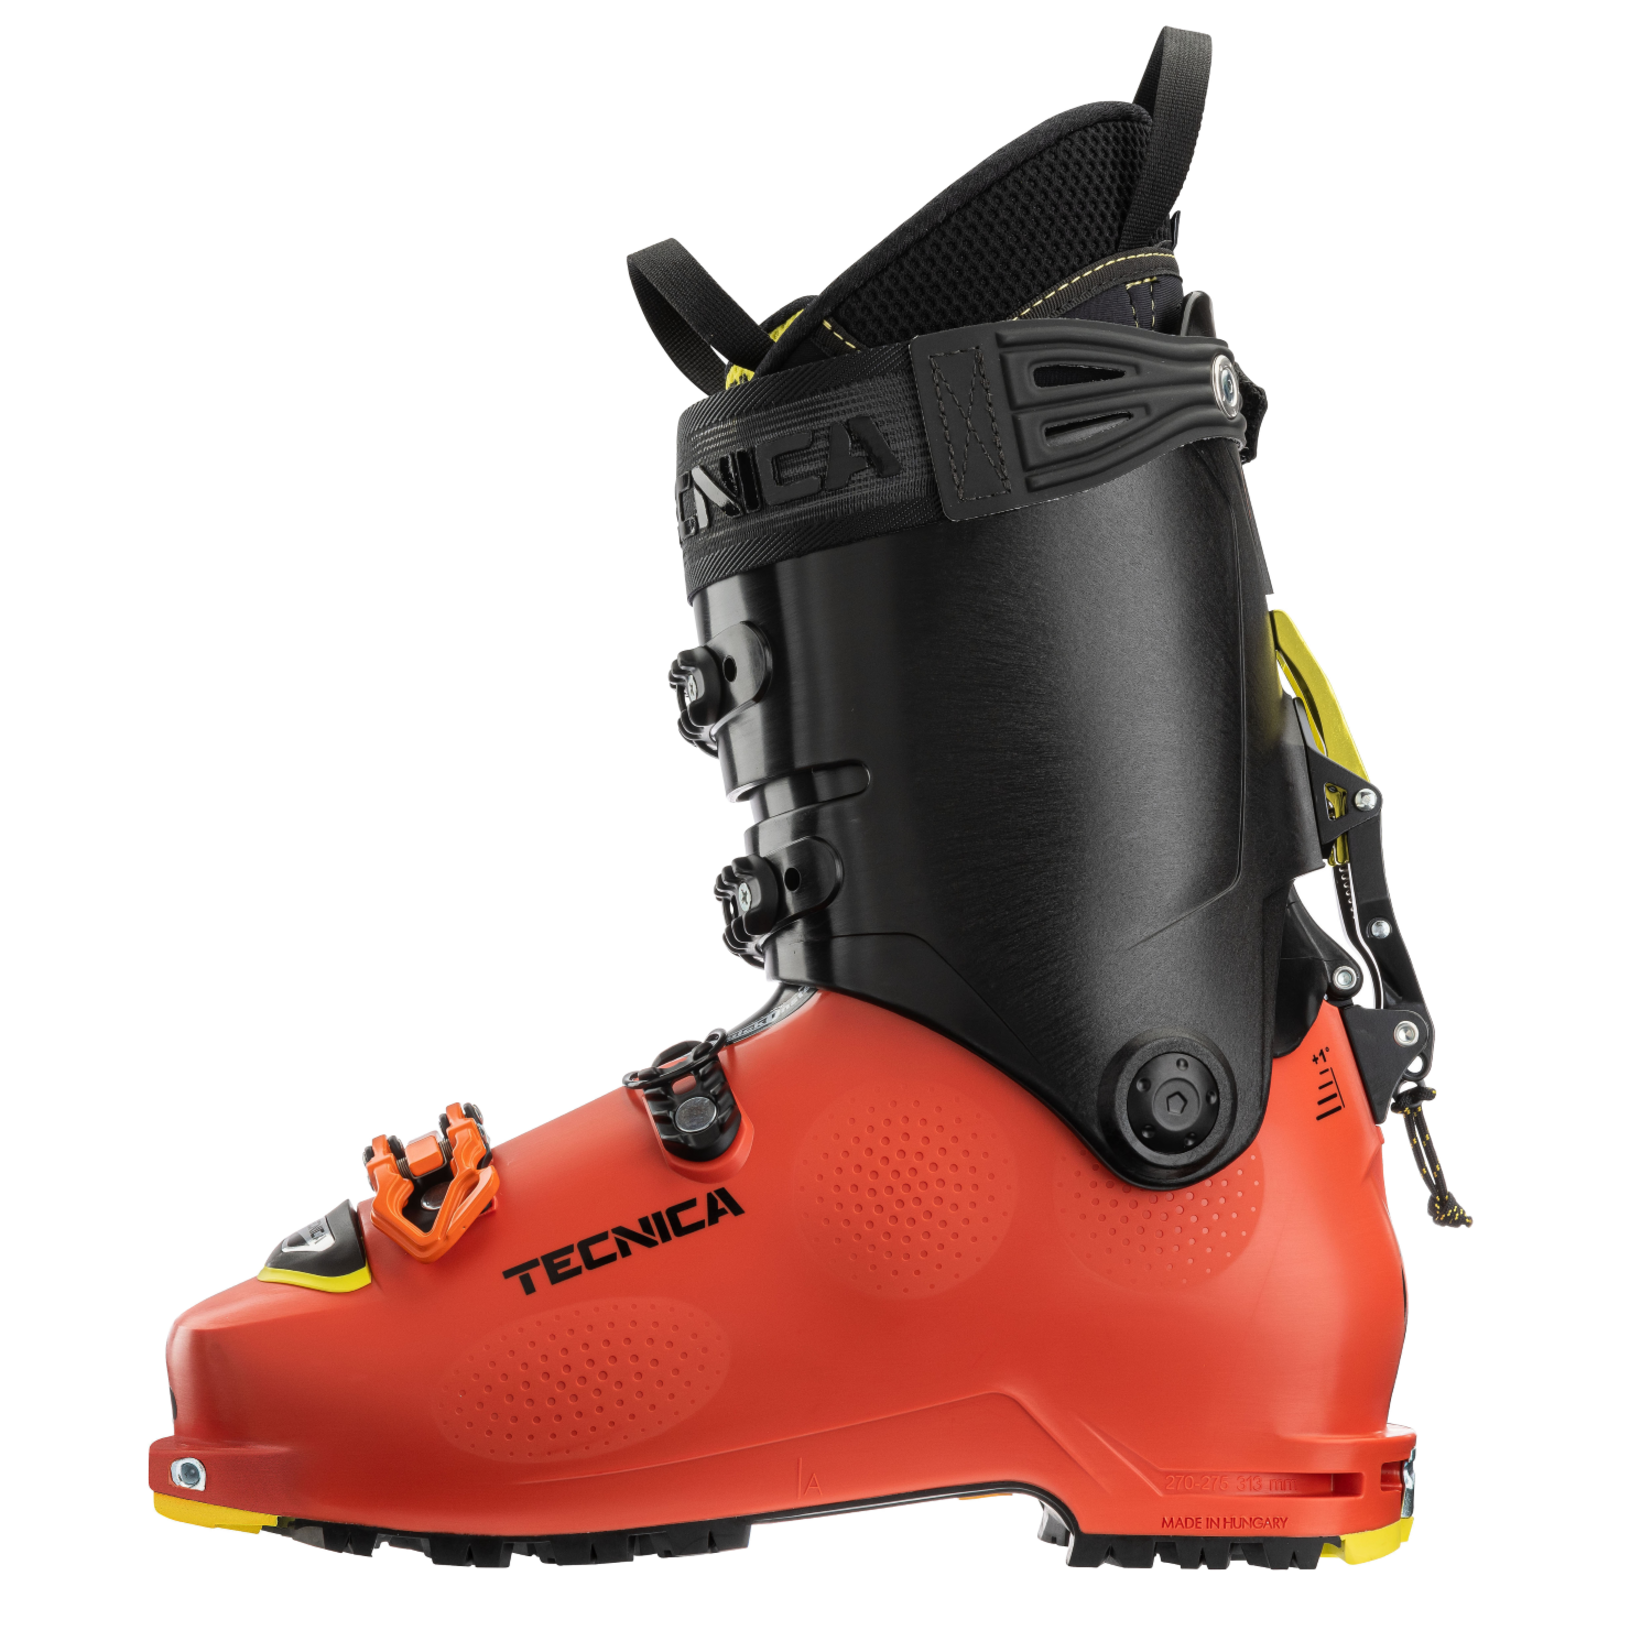 Tecnica Zero G Tour Pro Ski Boot Vertical Addiction Vertical Addiction